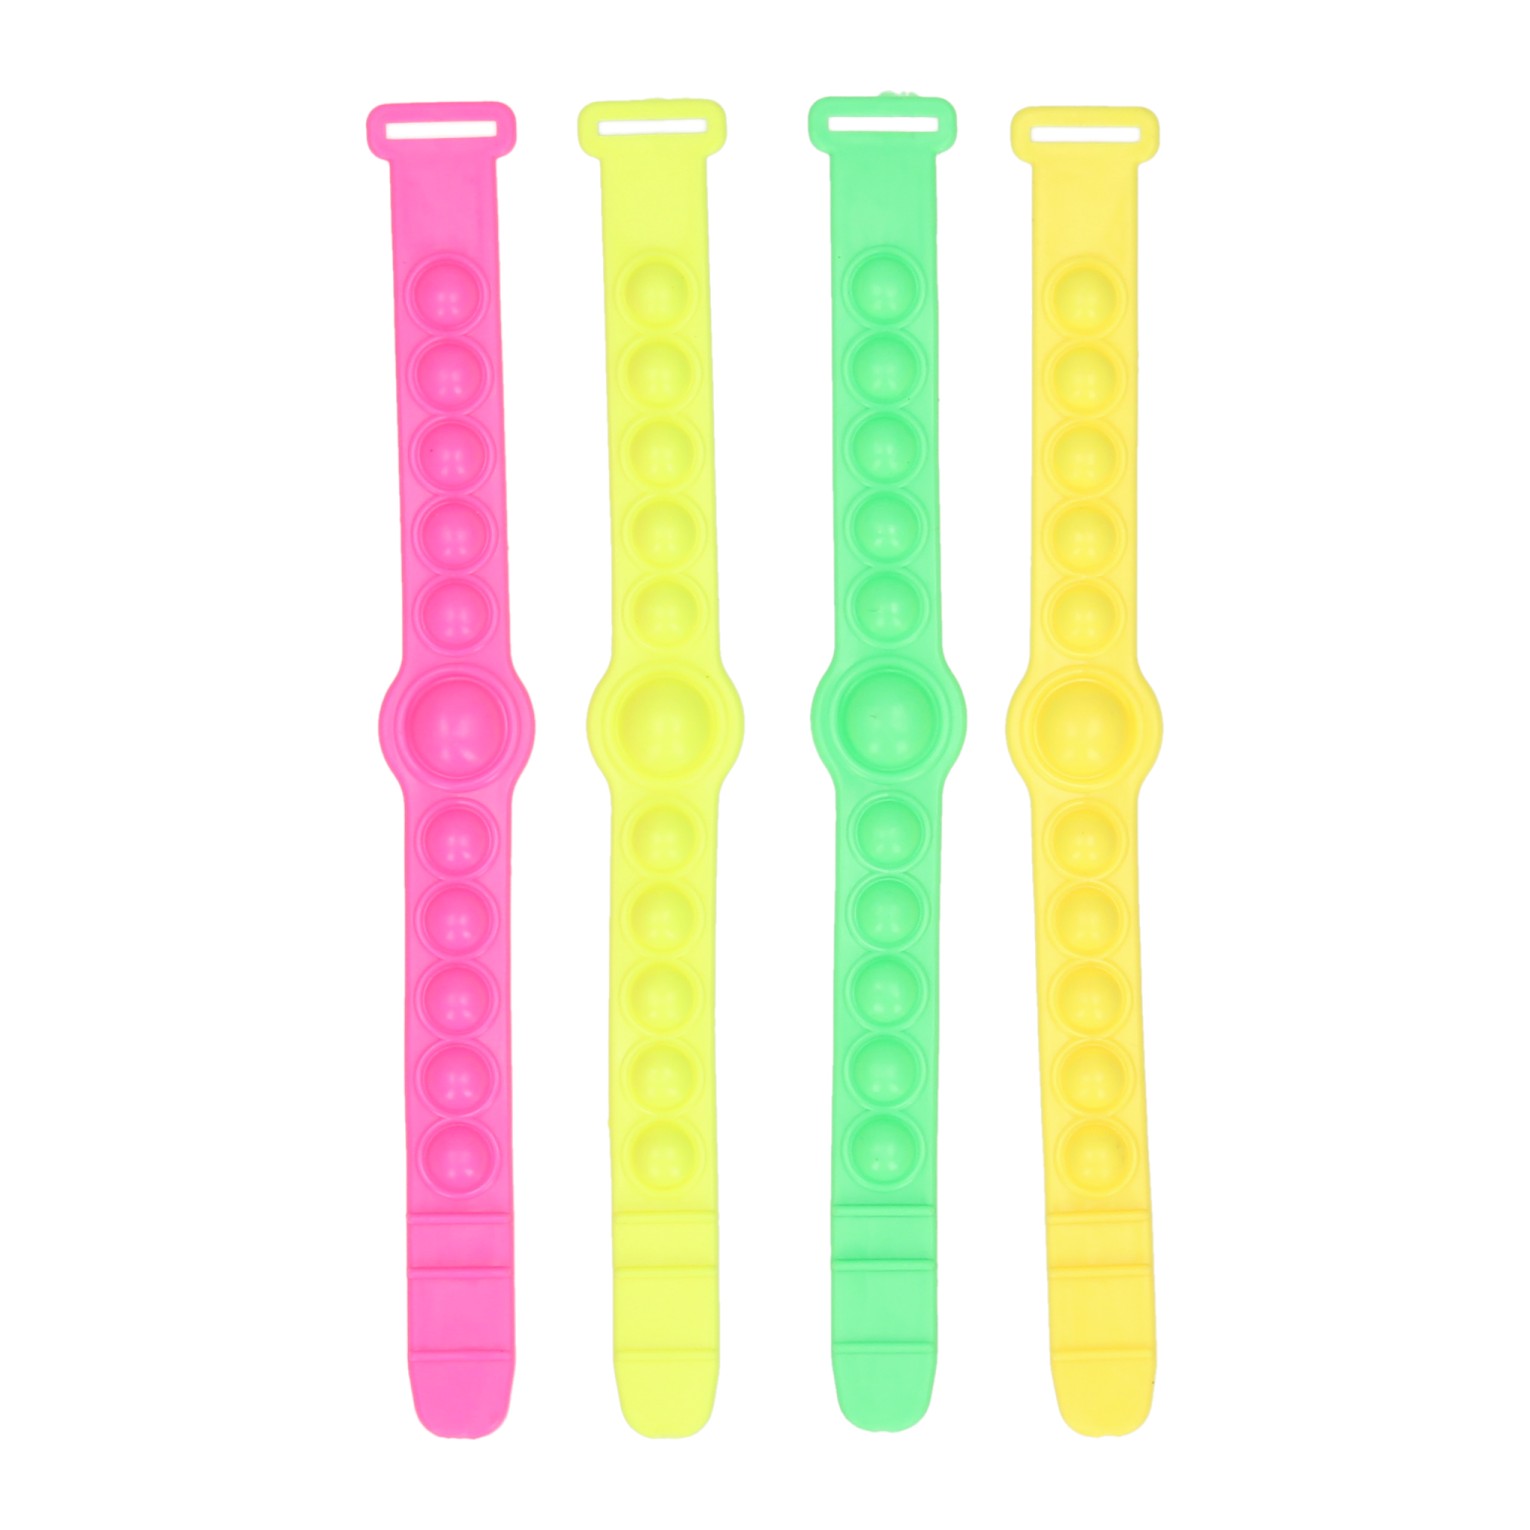 Farbe des Pop-It-Armbands